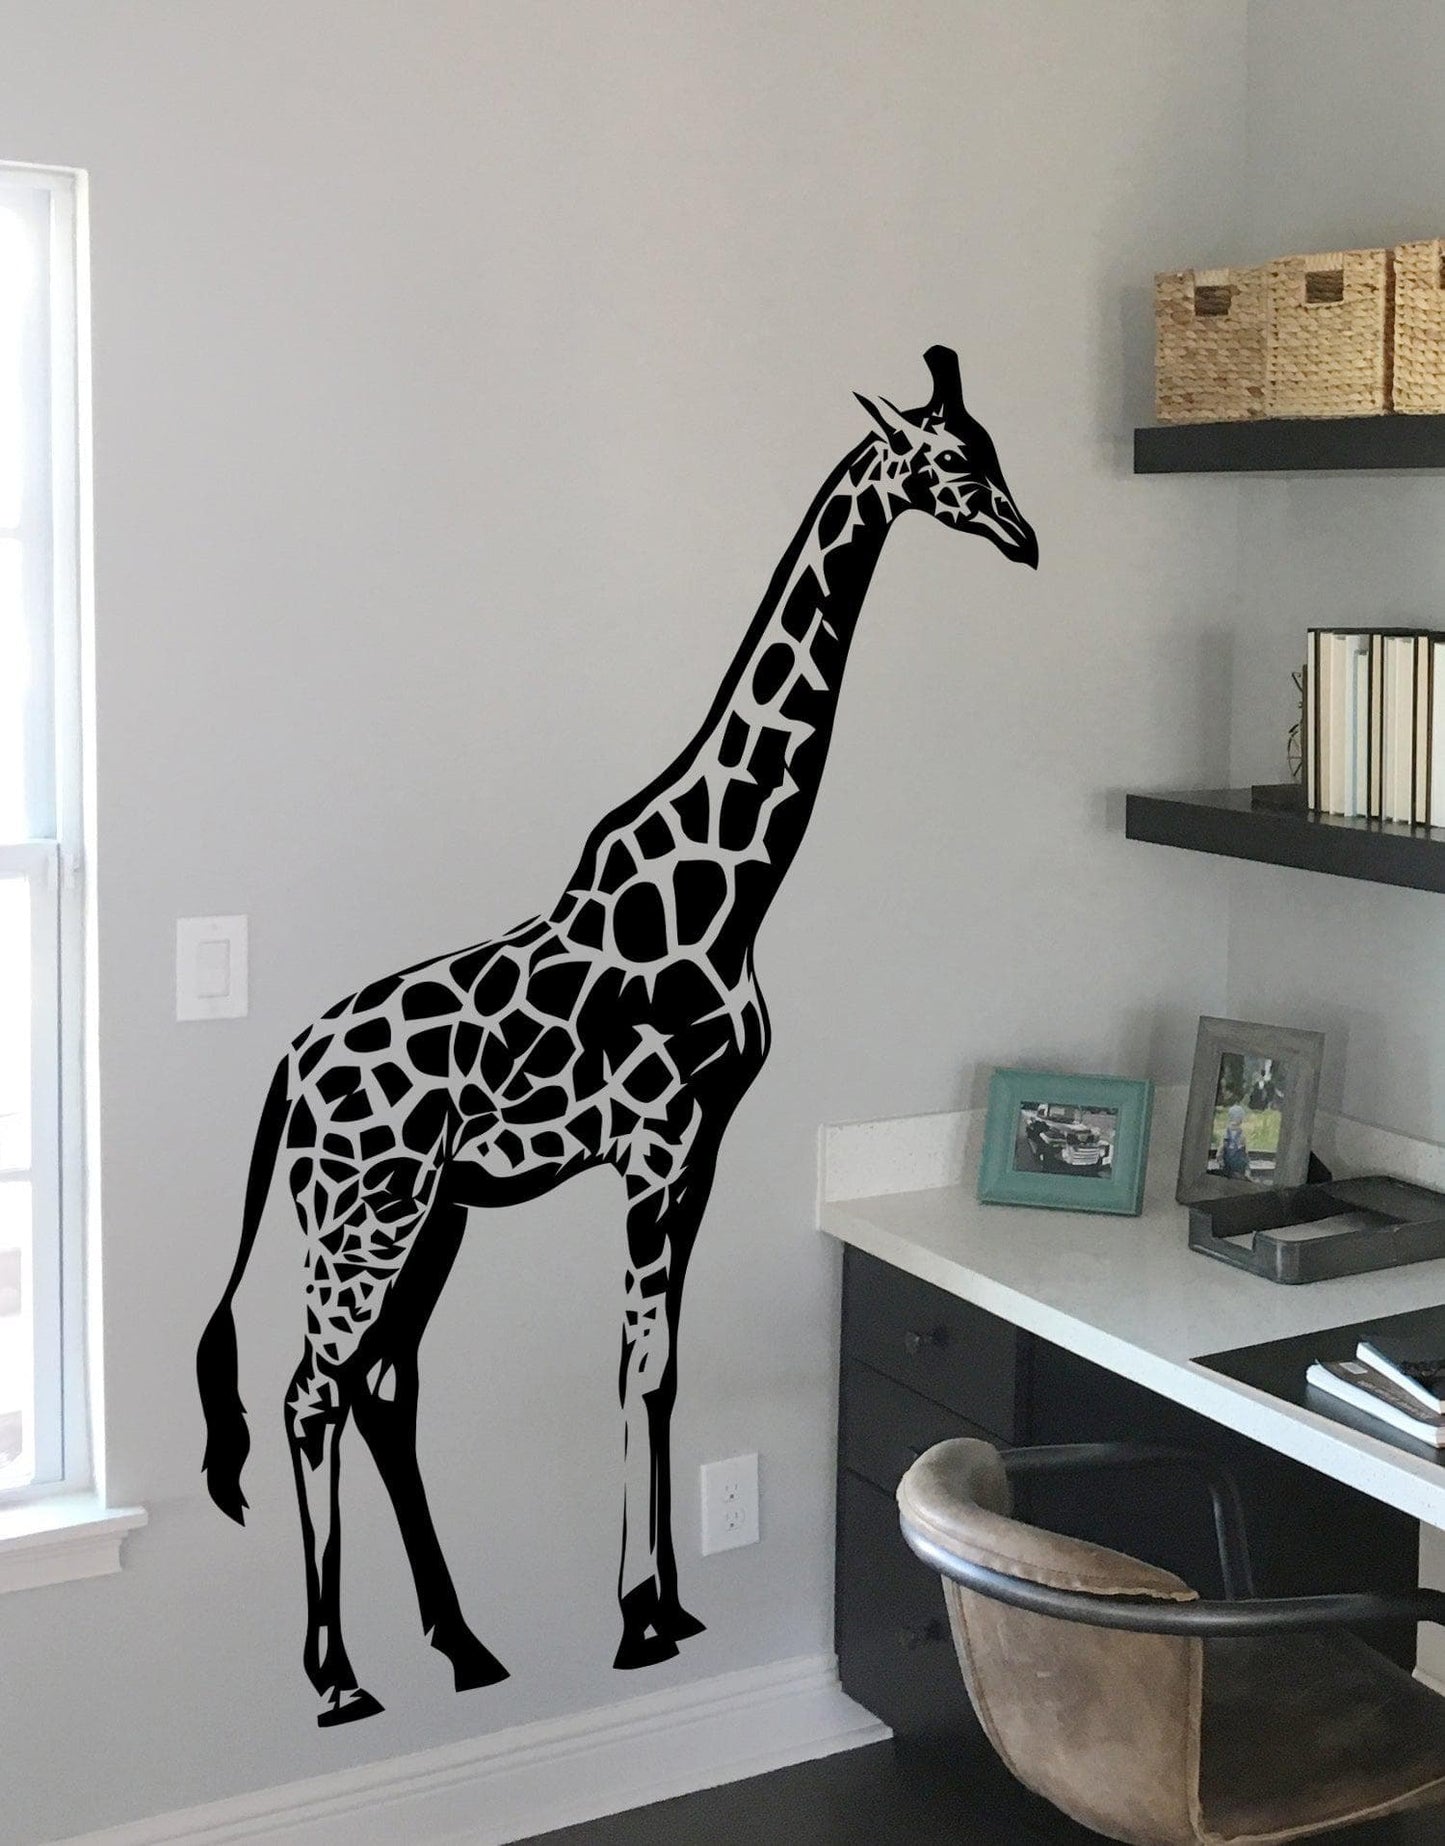 Tall Giraffe Wall Decal for the Nursery Room. #383